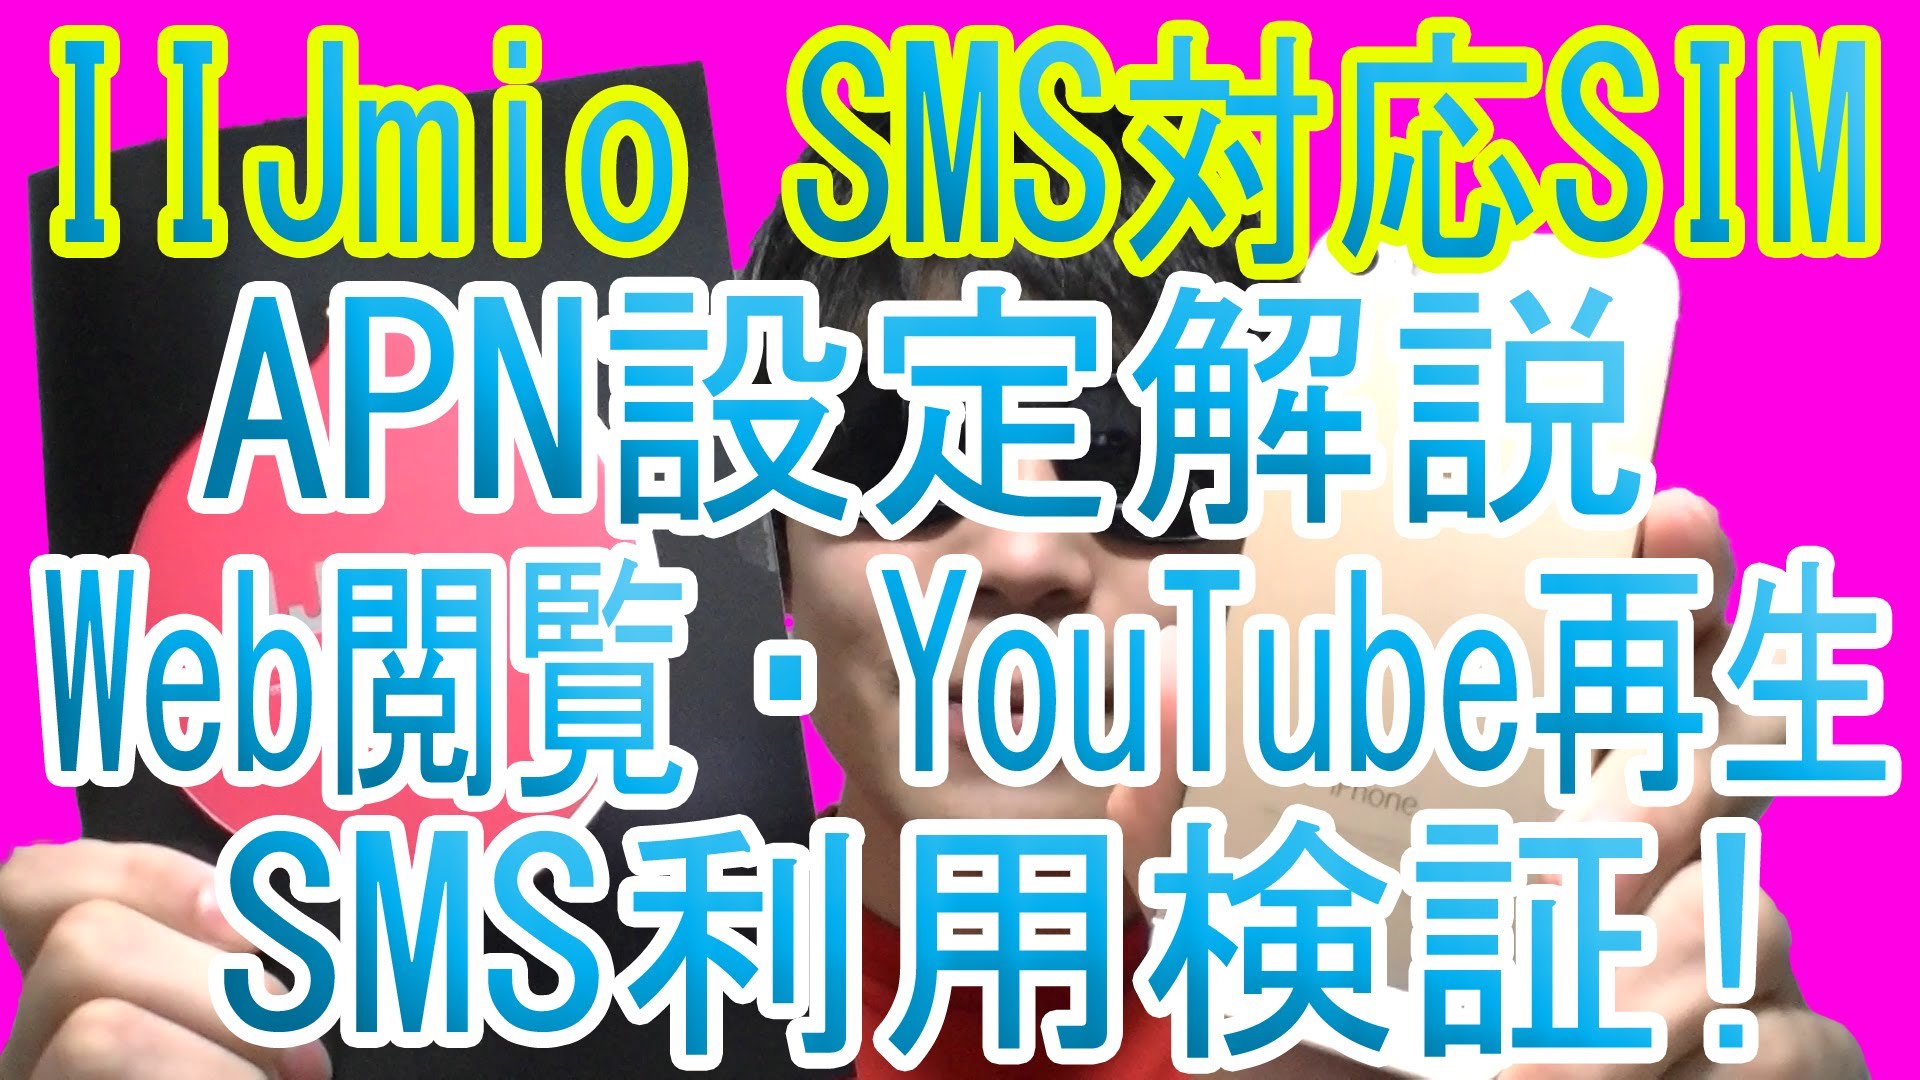 「IIJmio SMS対応SIM」APN設定解説！Web閲覧・YouTube再生・SMS利用検証！国内版SIMフリー iPhone5Sで使う！